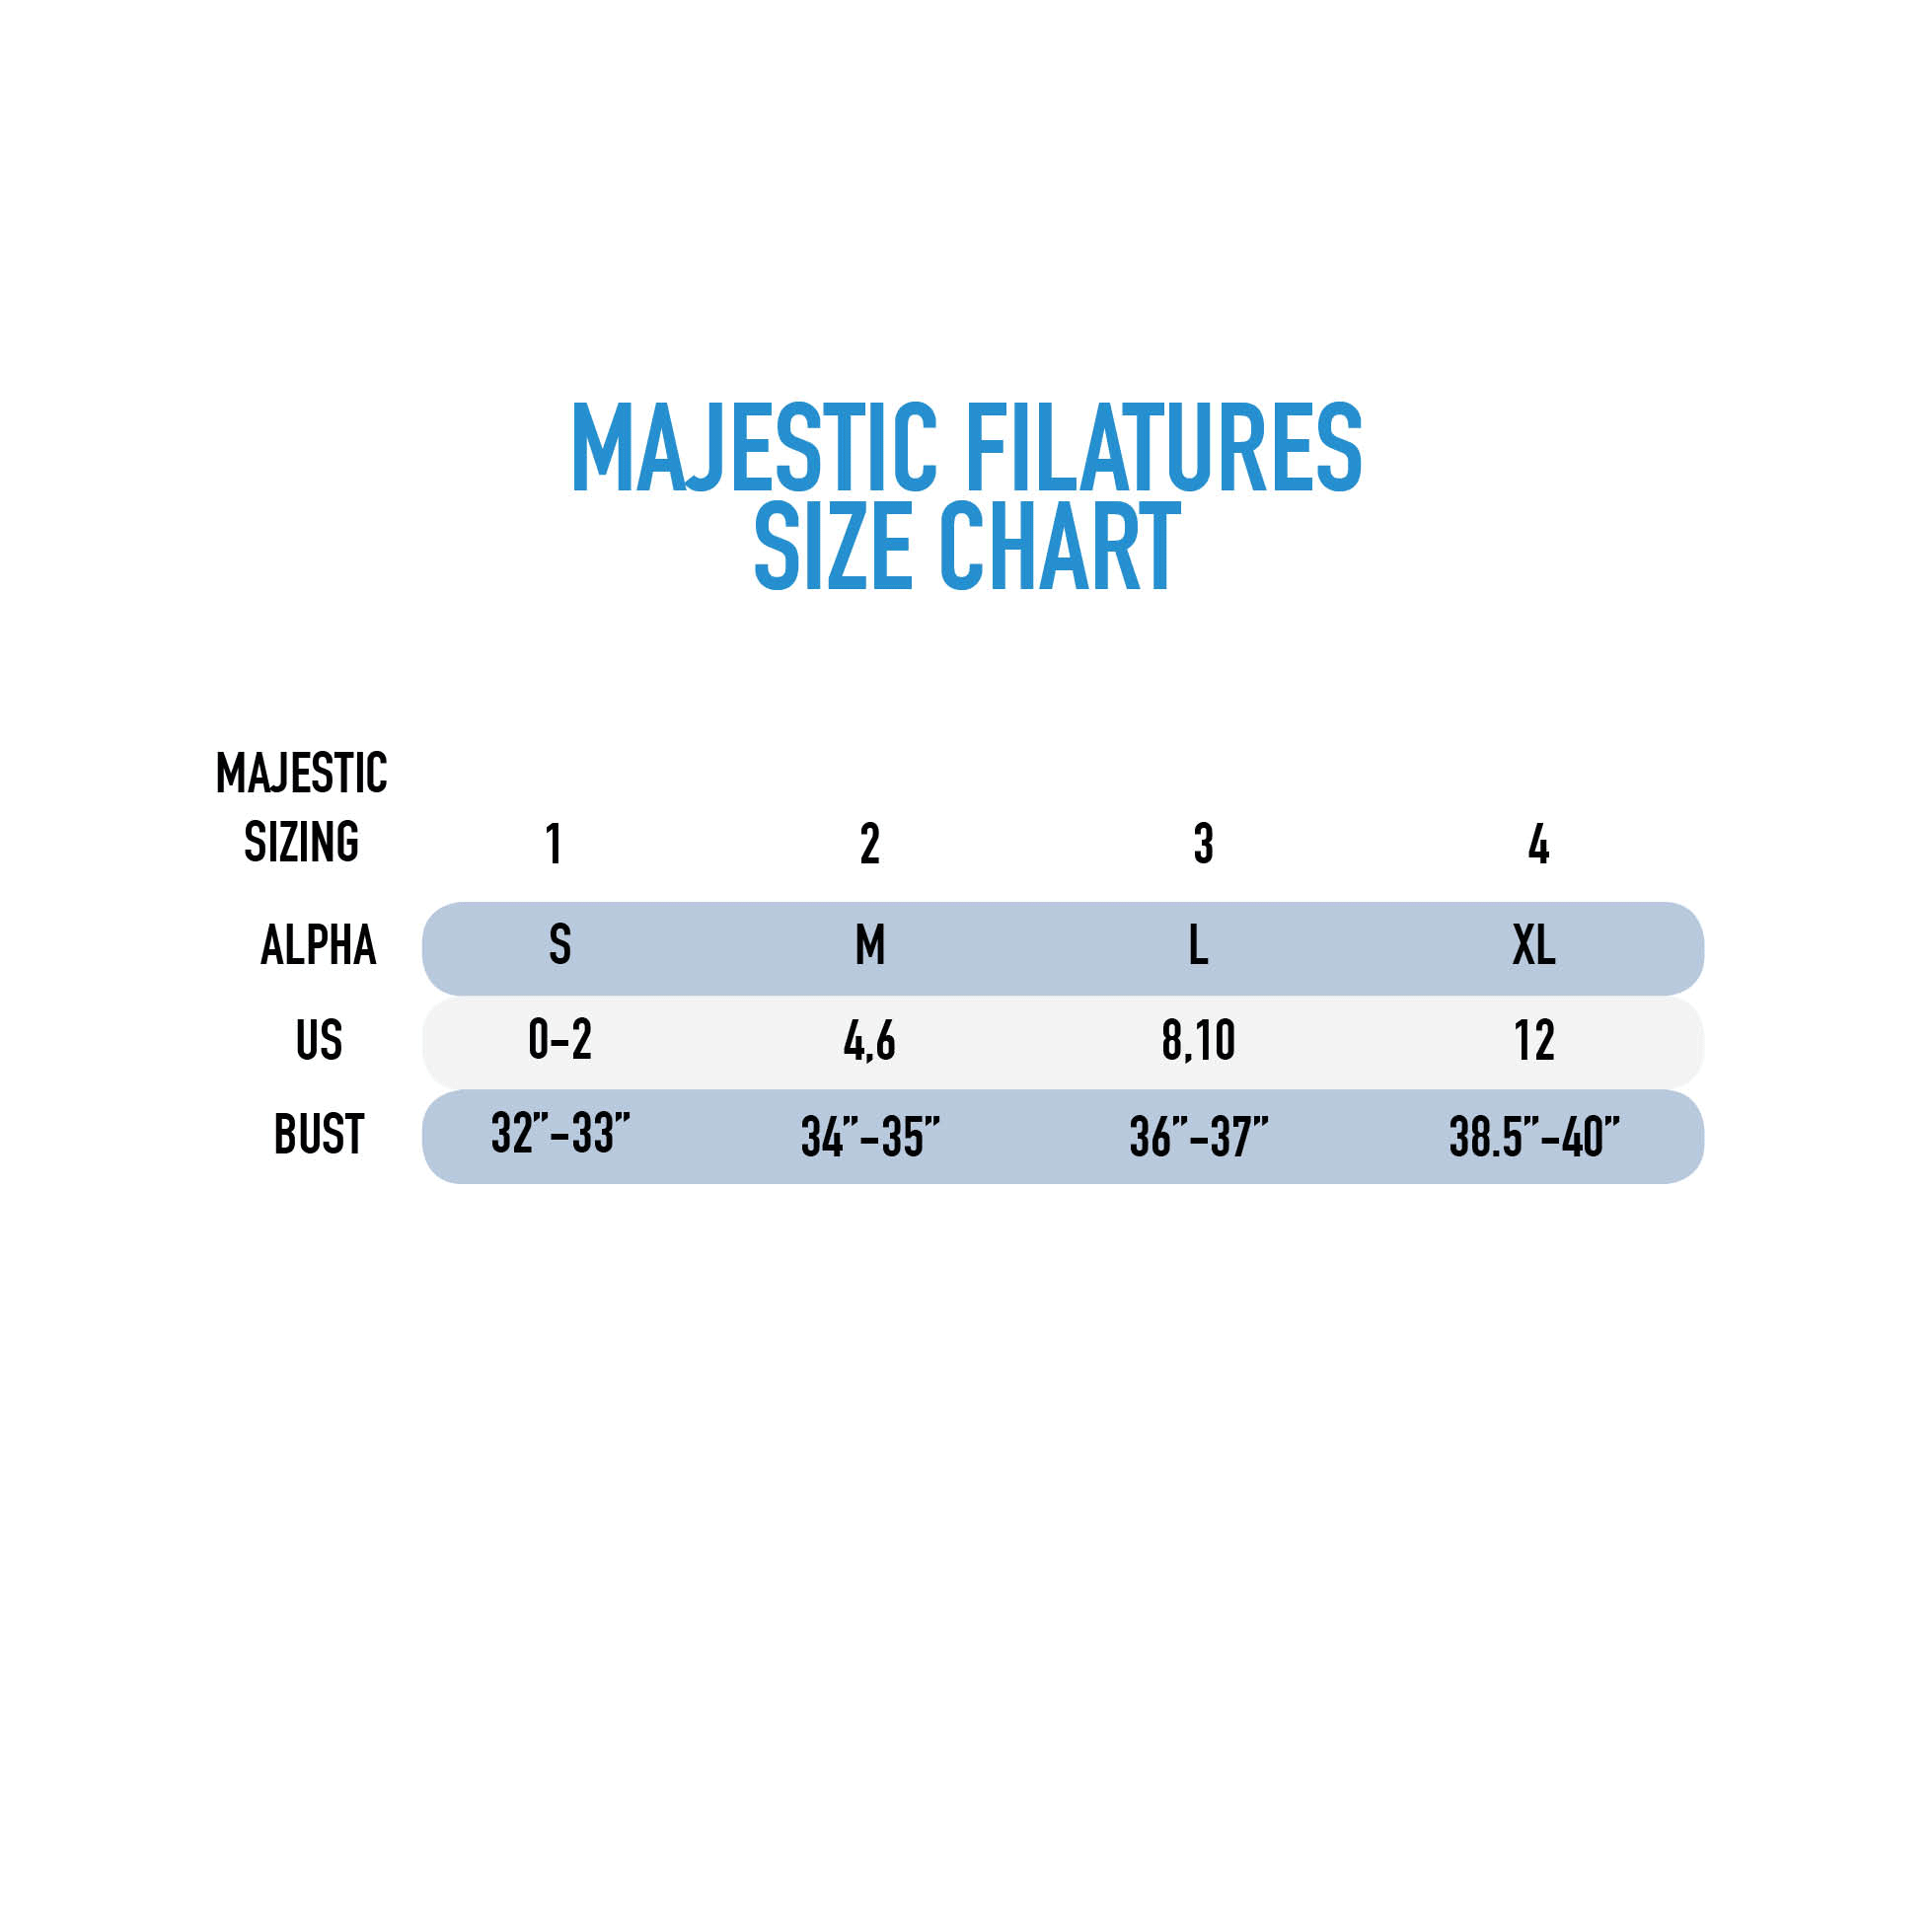 majestic filatures size chart - Part.tscoreks.org